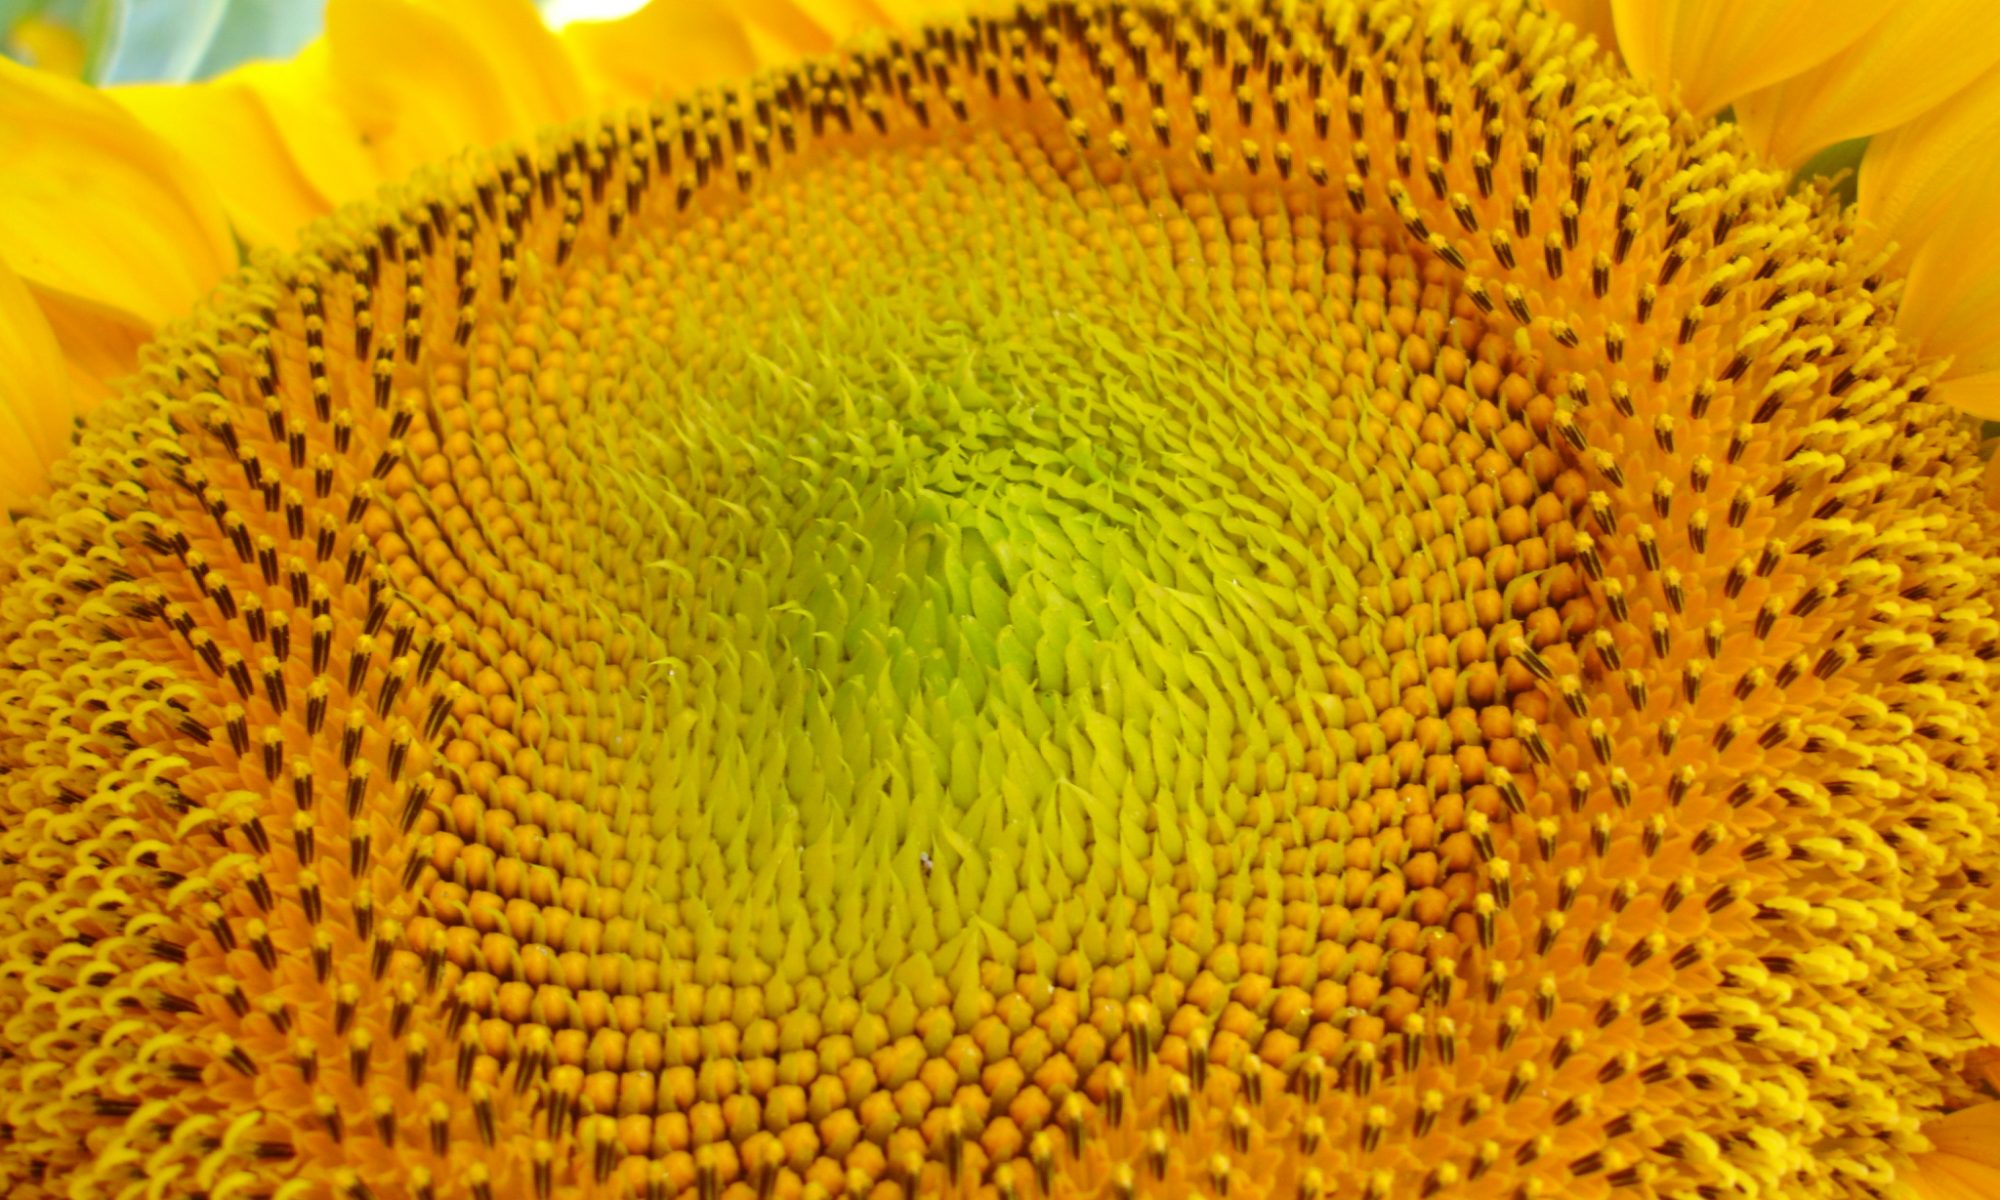 Close-up of a sunflower head.